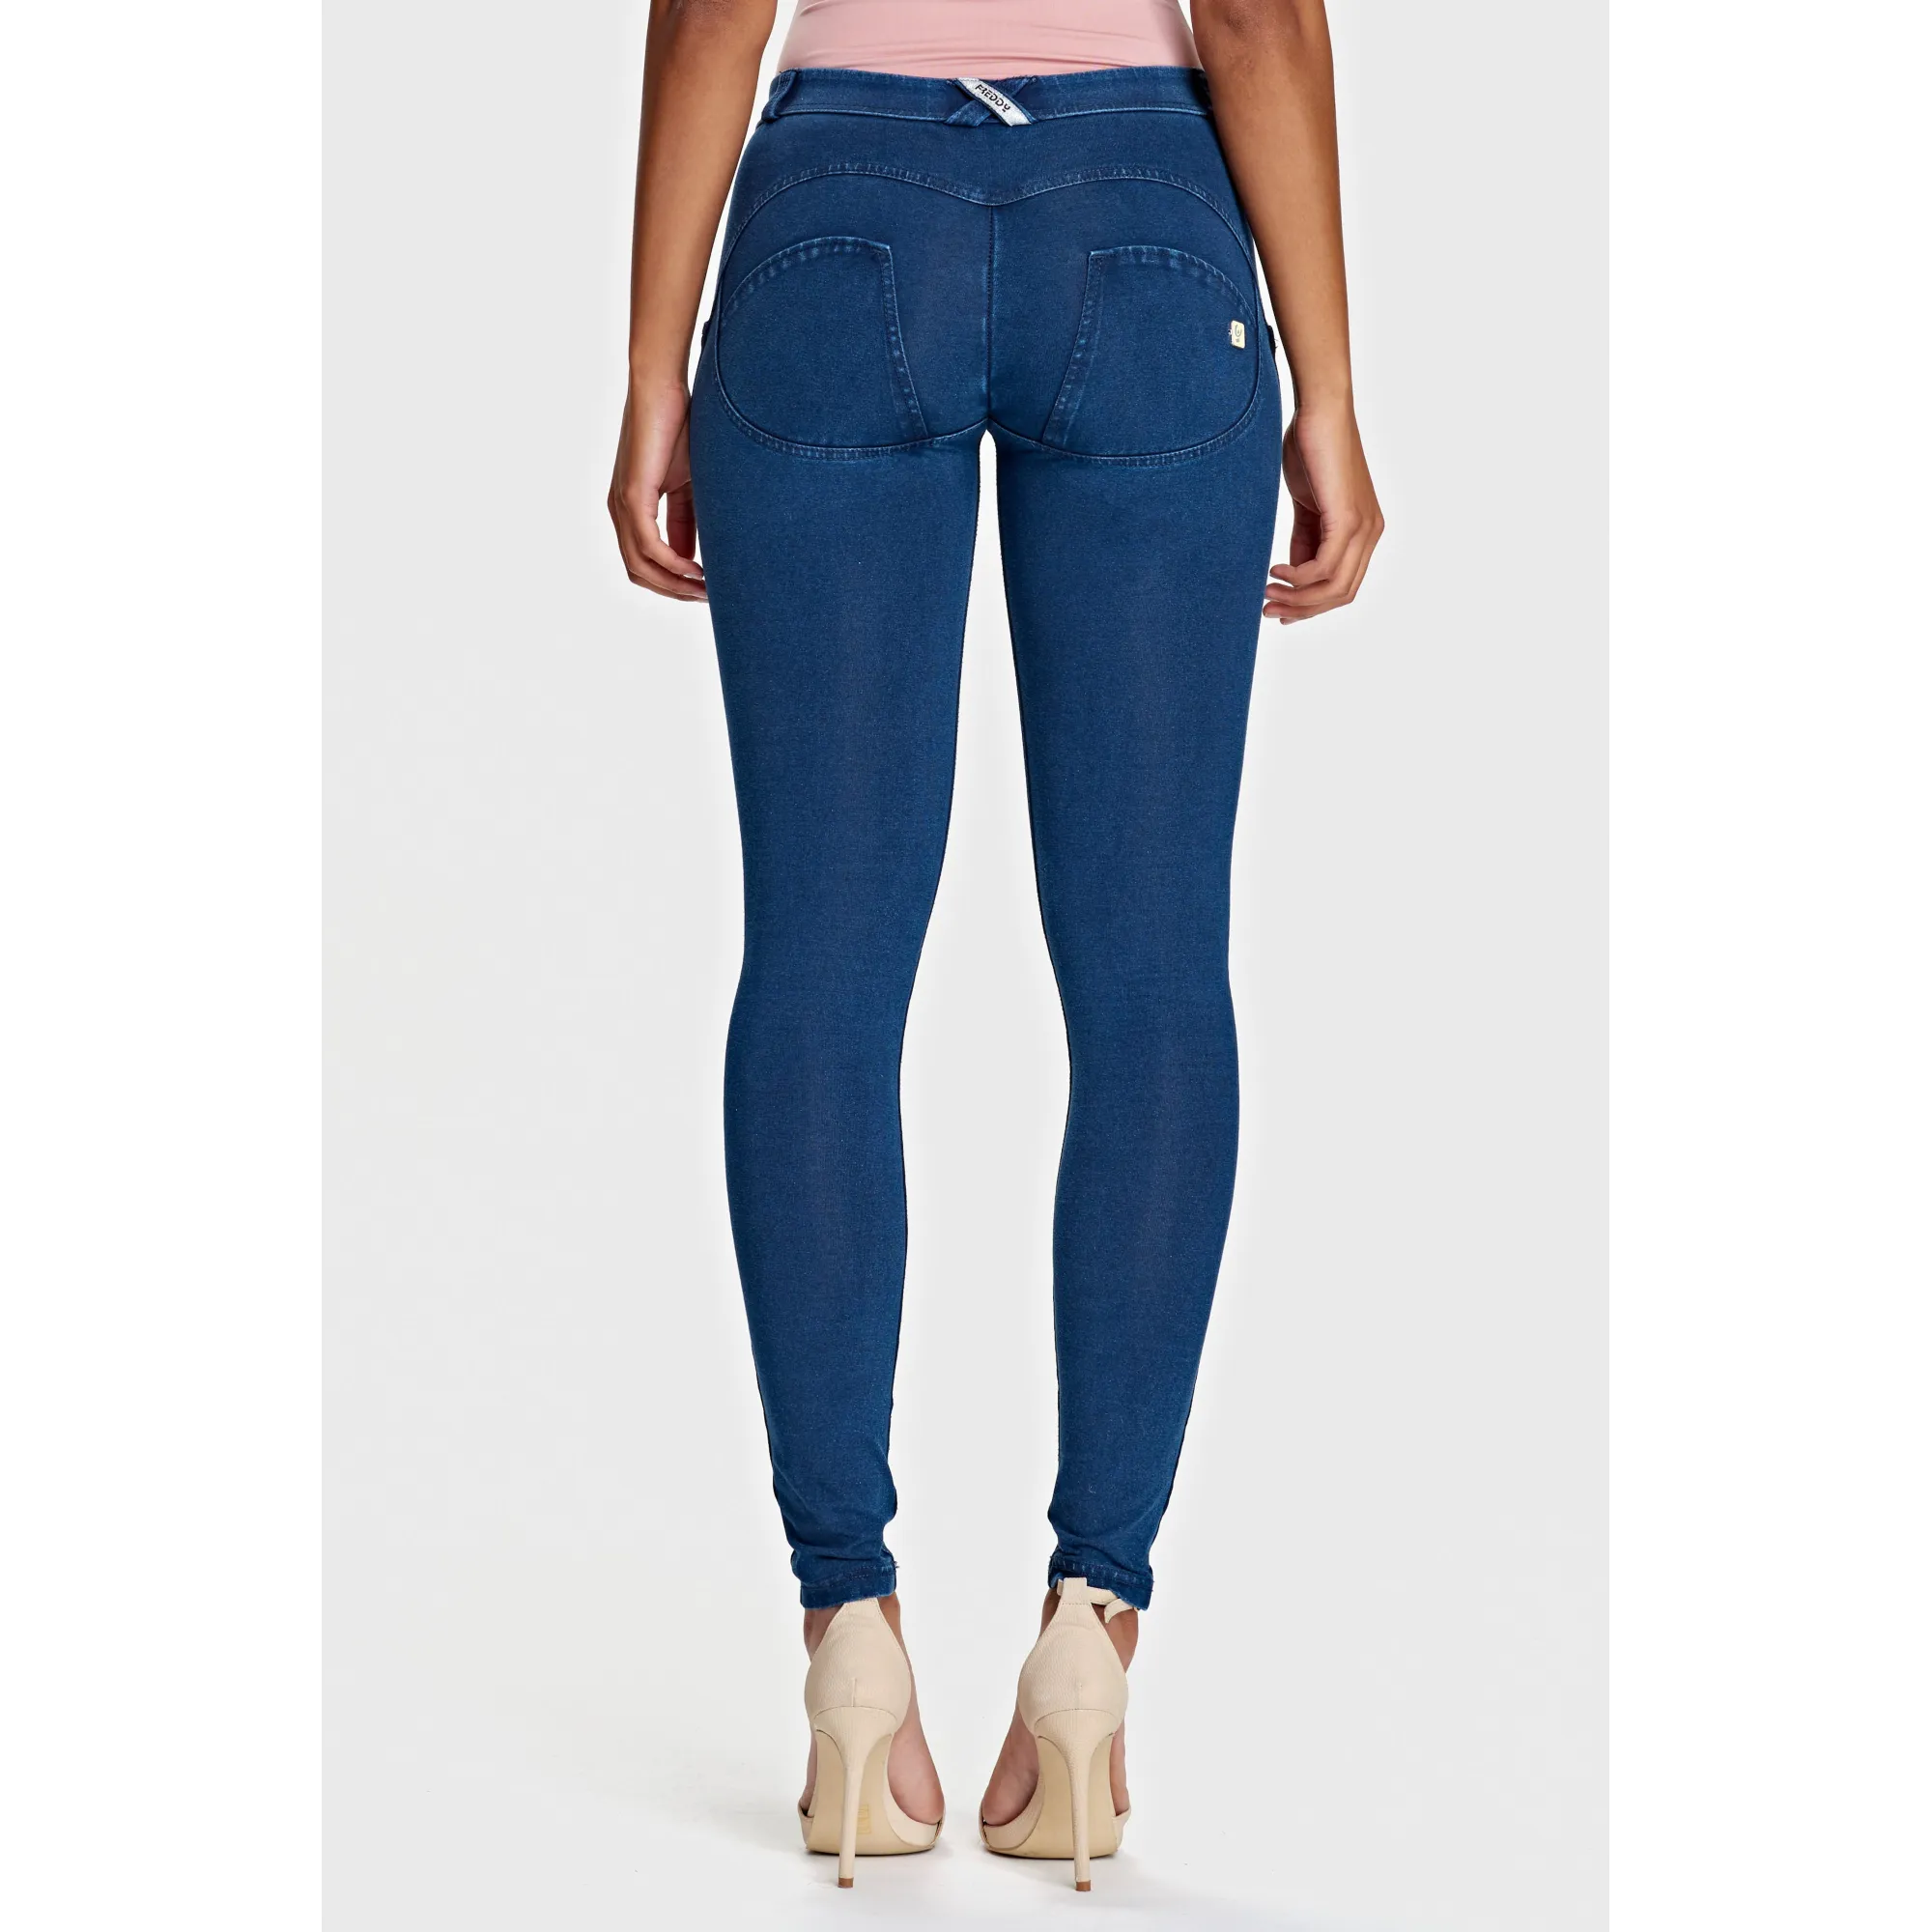 Freddy WR.UP® Damen Push-Up Jeans - Regular Waist Super Skinny - Indigoblau - Blaue Nähte